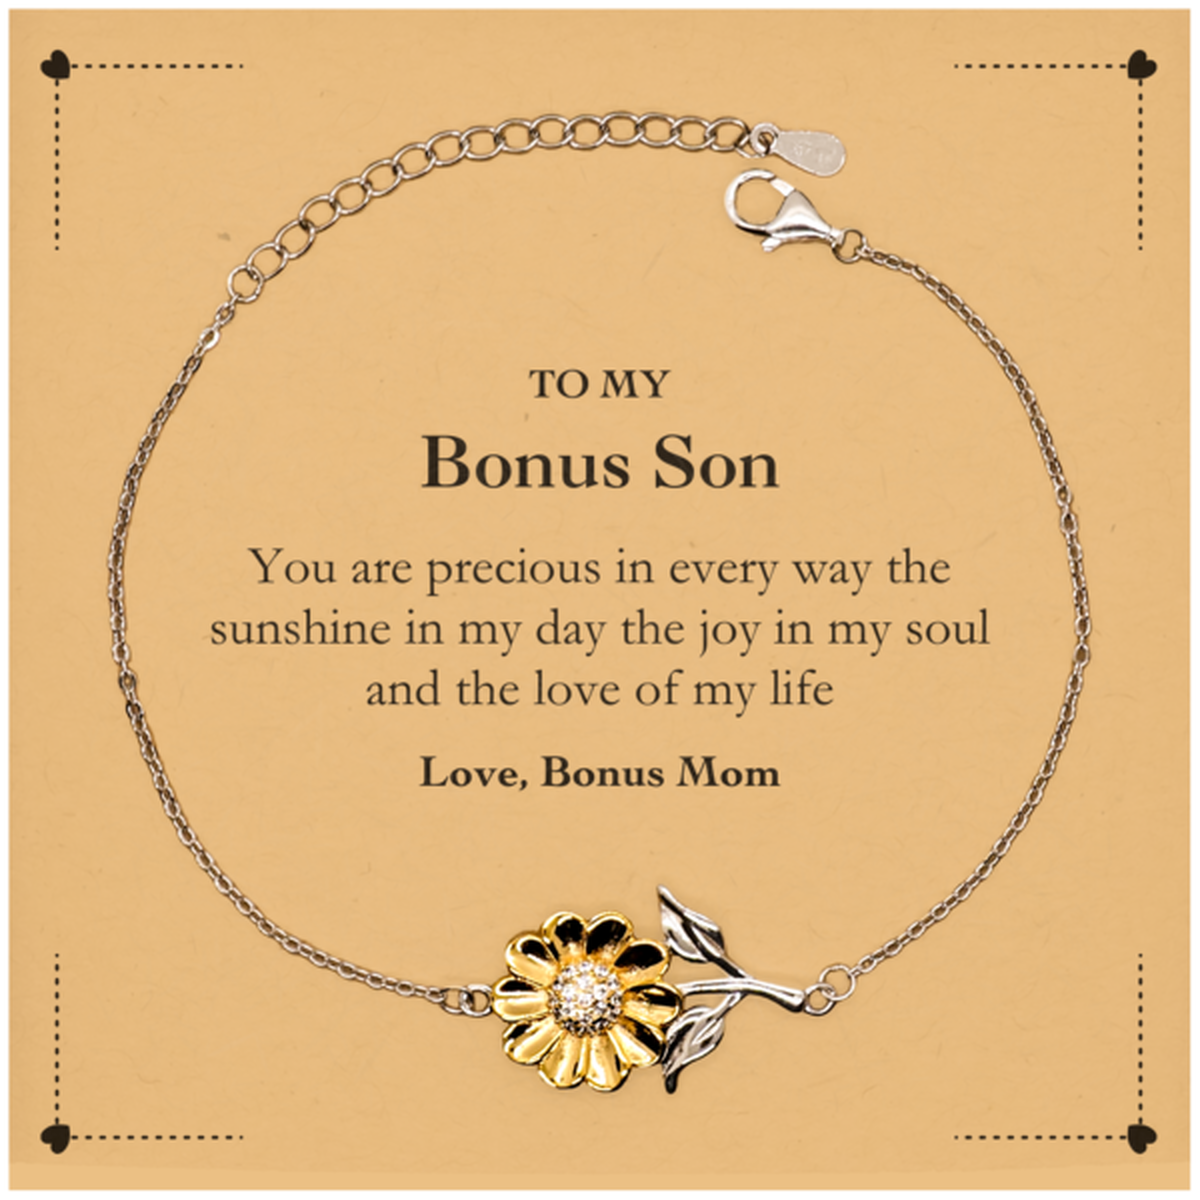 Graduation Gifts for Bonus Son Sunflower Bracelet Present from Bonus Mom, Christmas Bonus Son Birthday Gifts Bonus Son You are precious in every way the sunshine in my day. Love, Bonus Mom